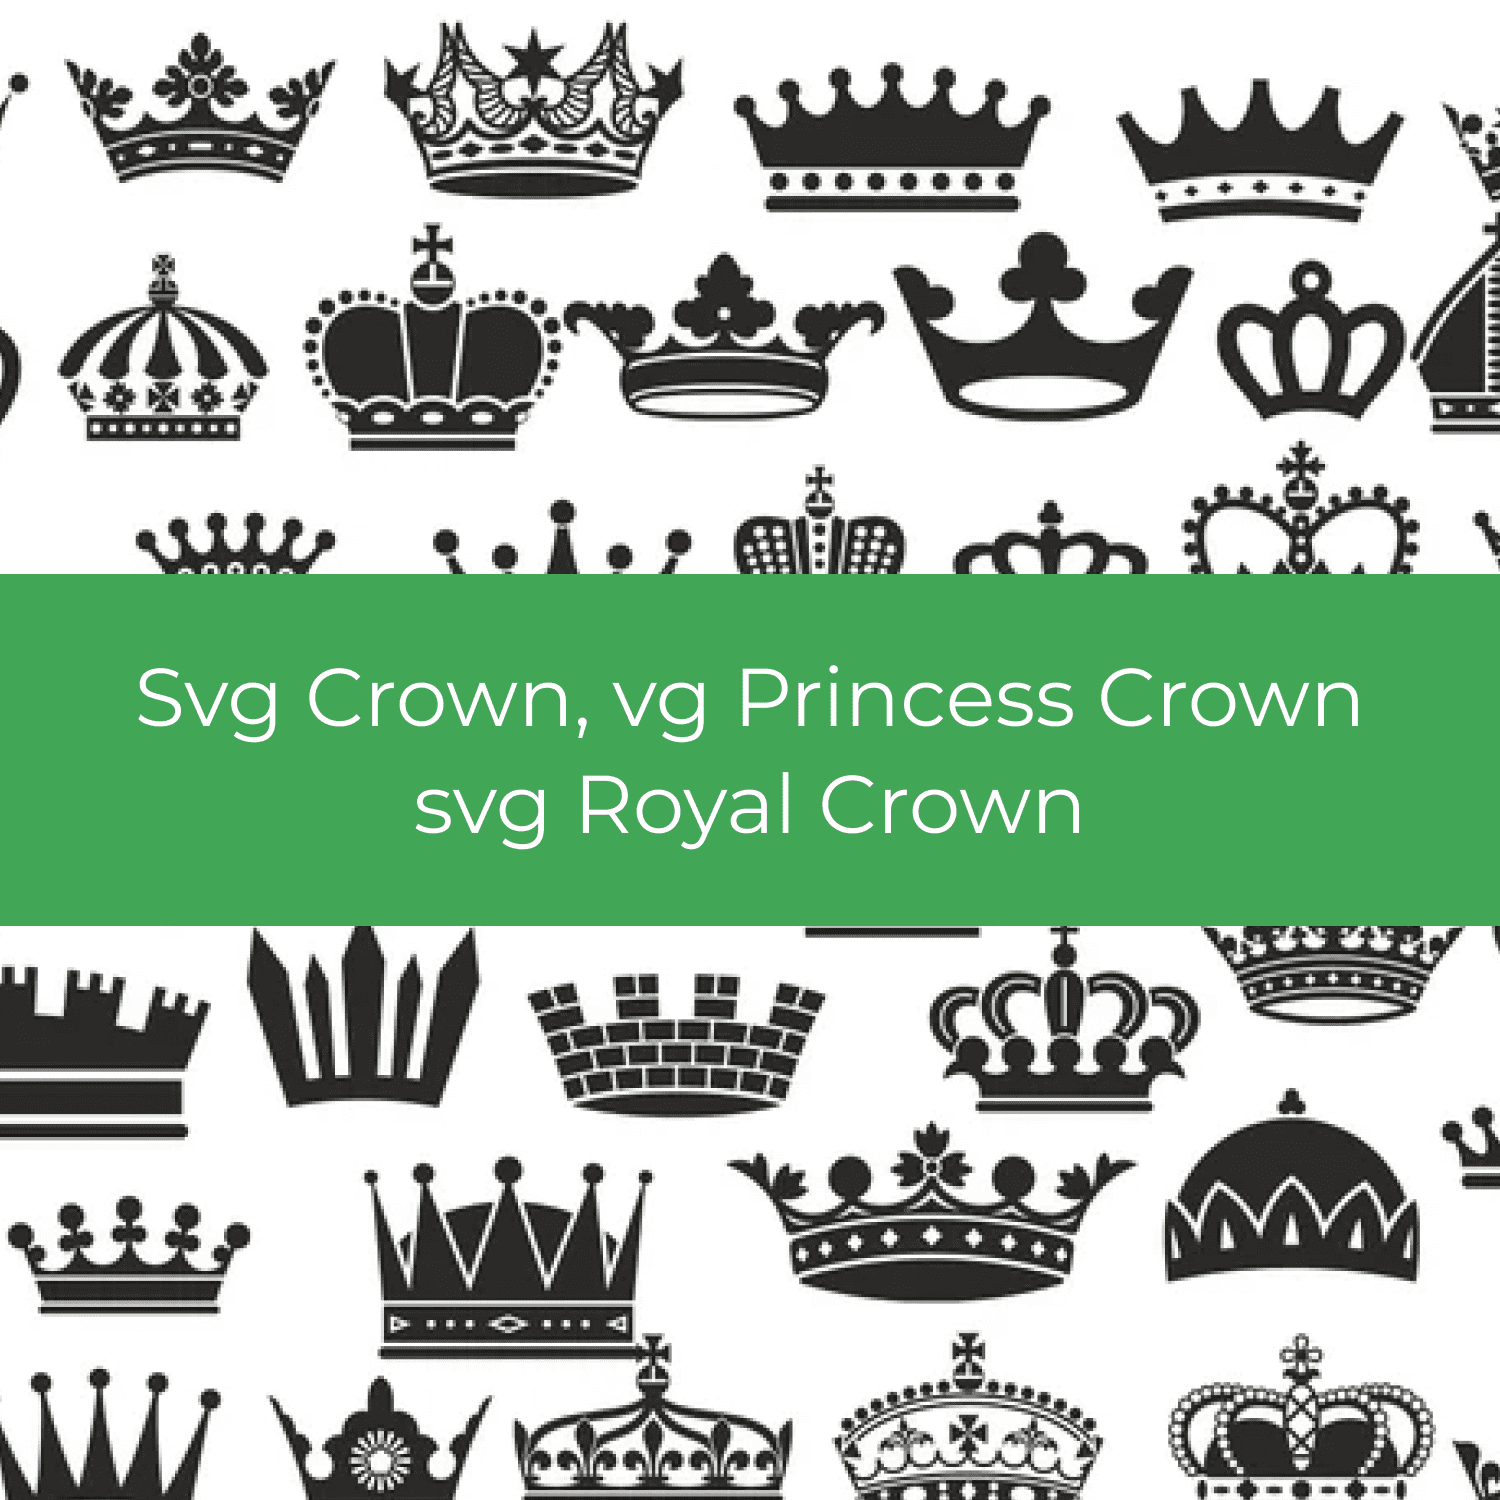 Royal Princess Crown Svg.